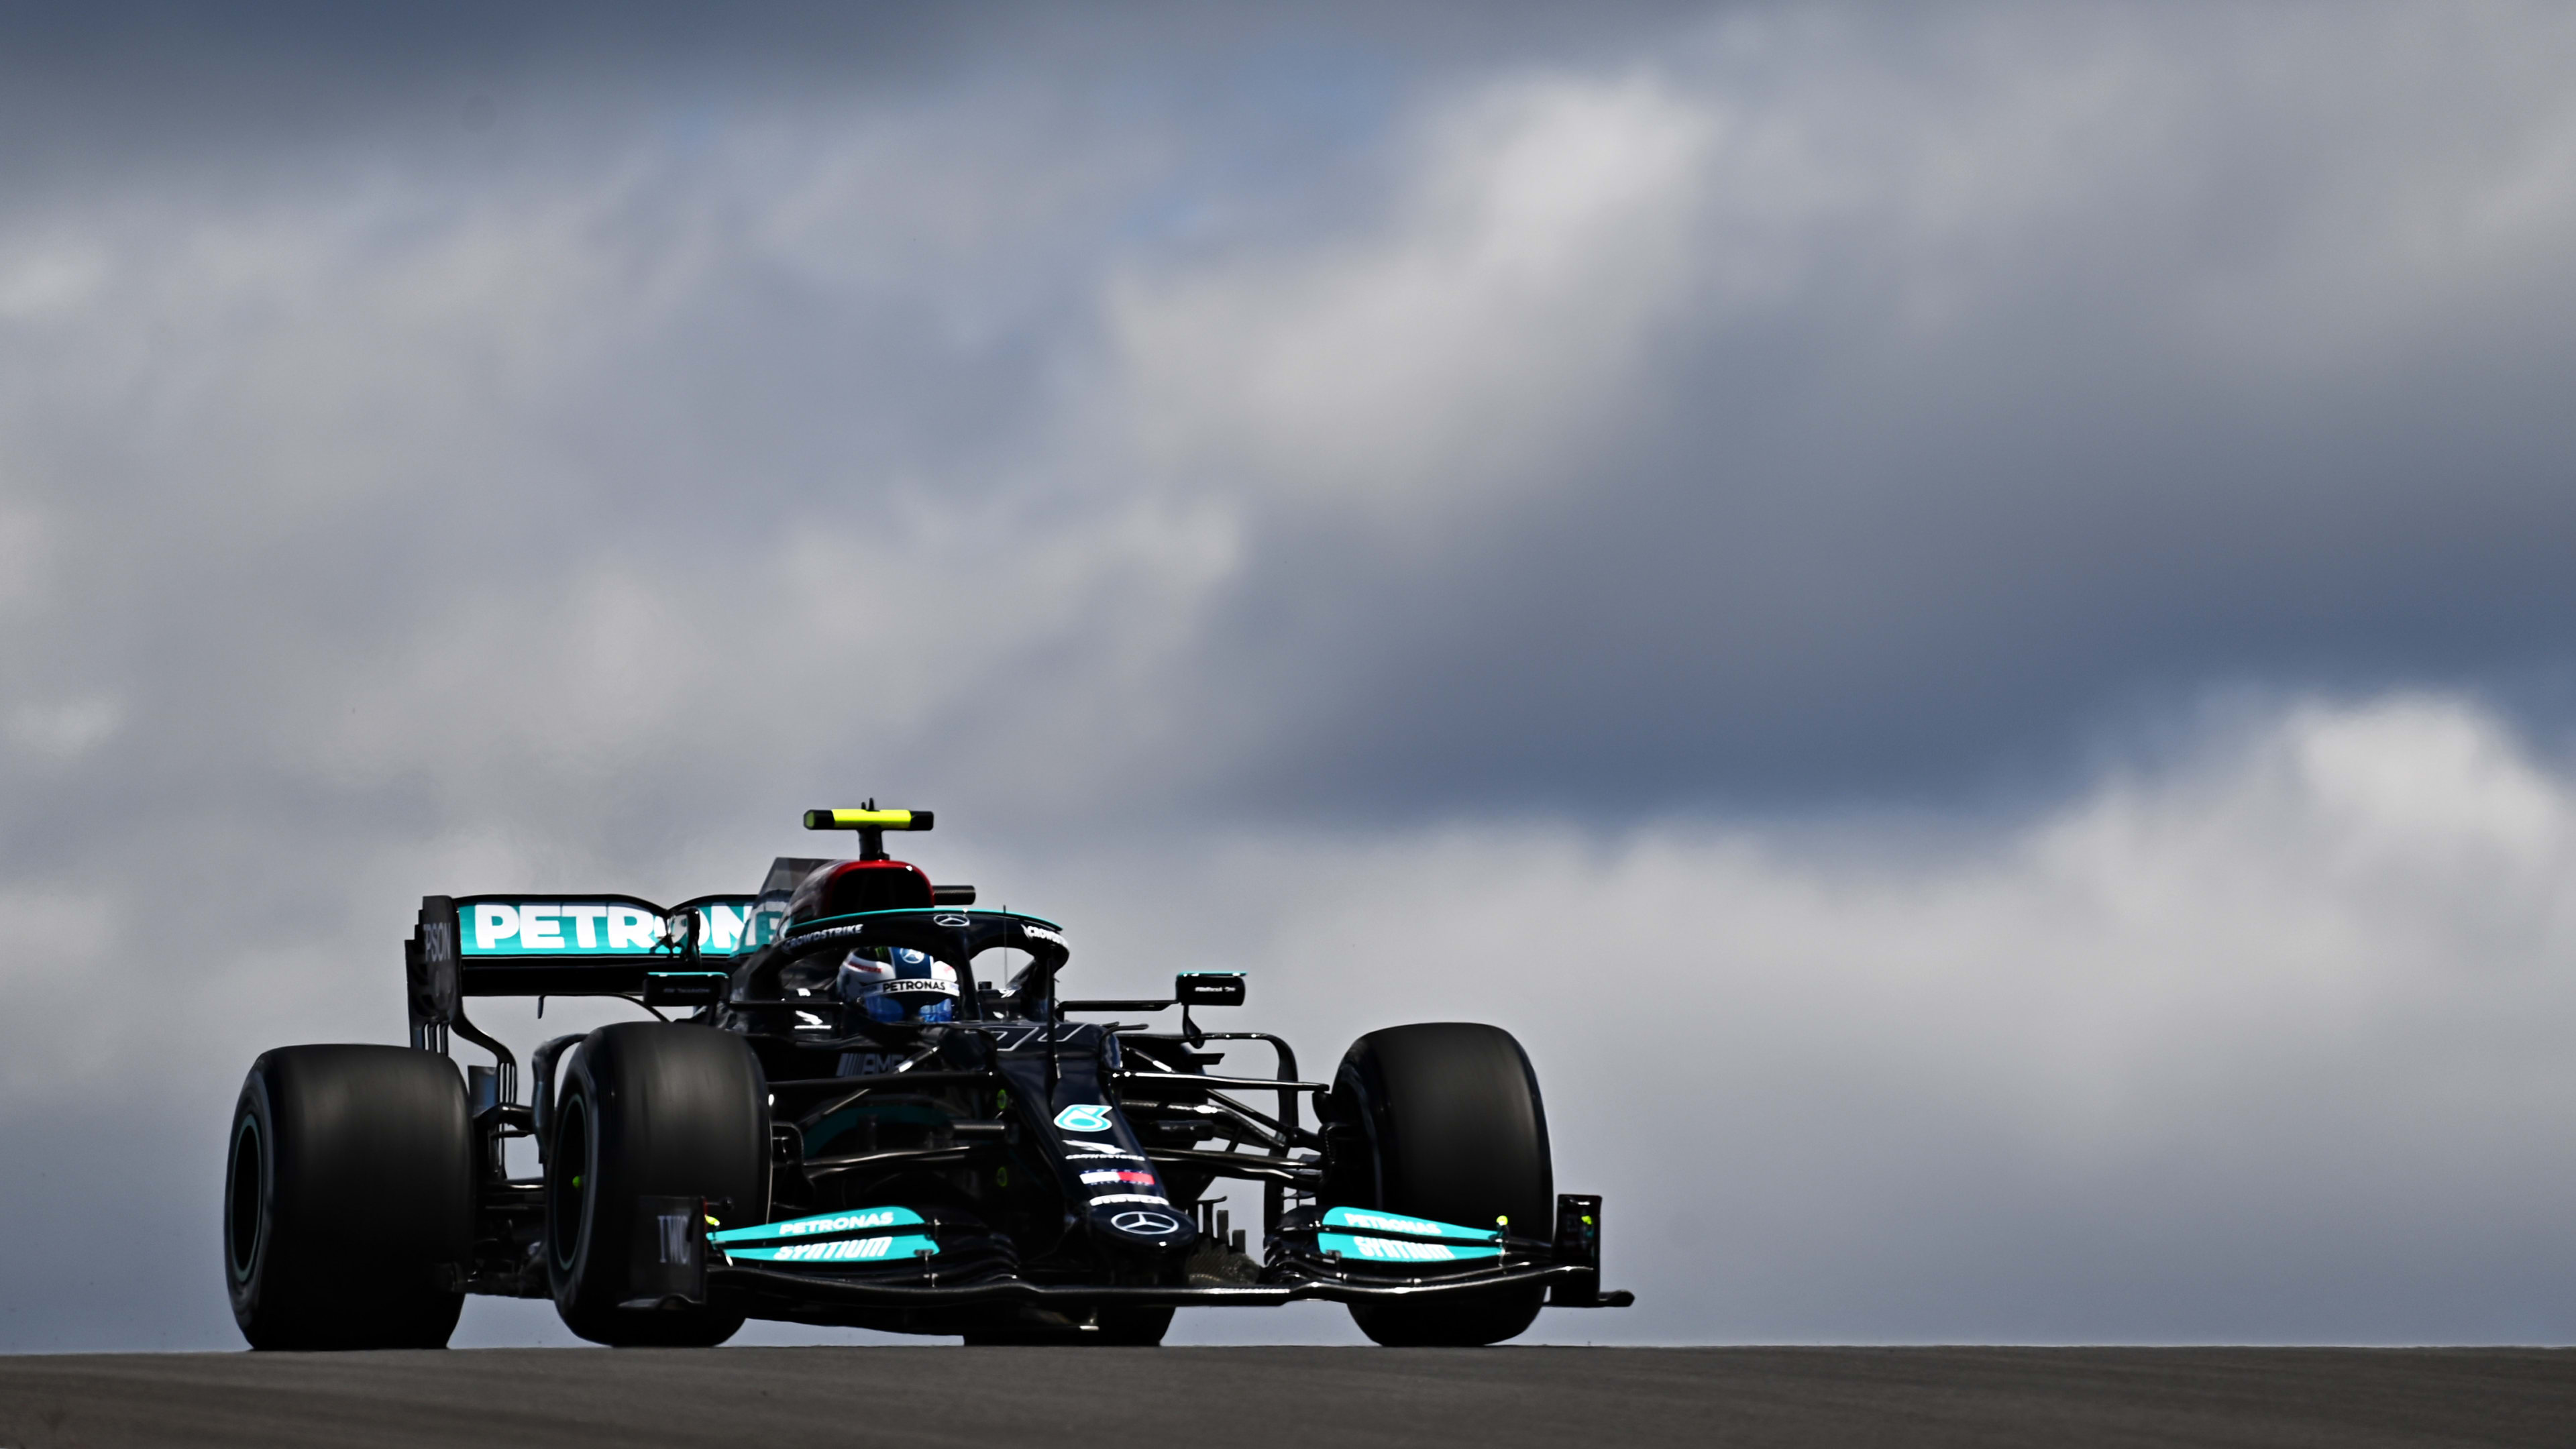 2021 Portuguese Grand Prix FP1 Bottas leads Verstappen in close opening practice session at Portimao Formula 1®